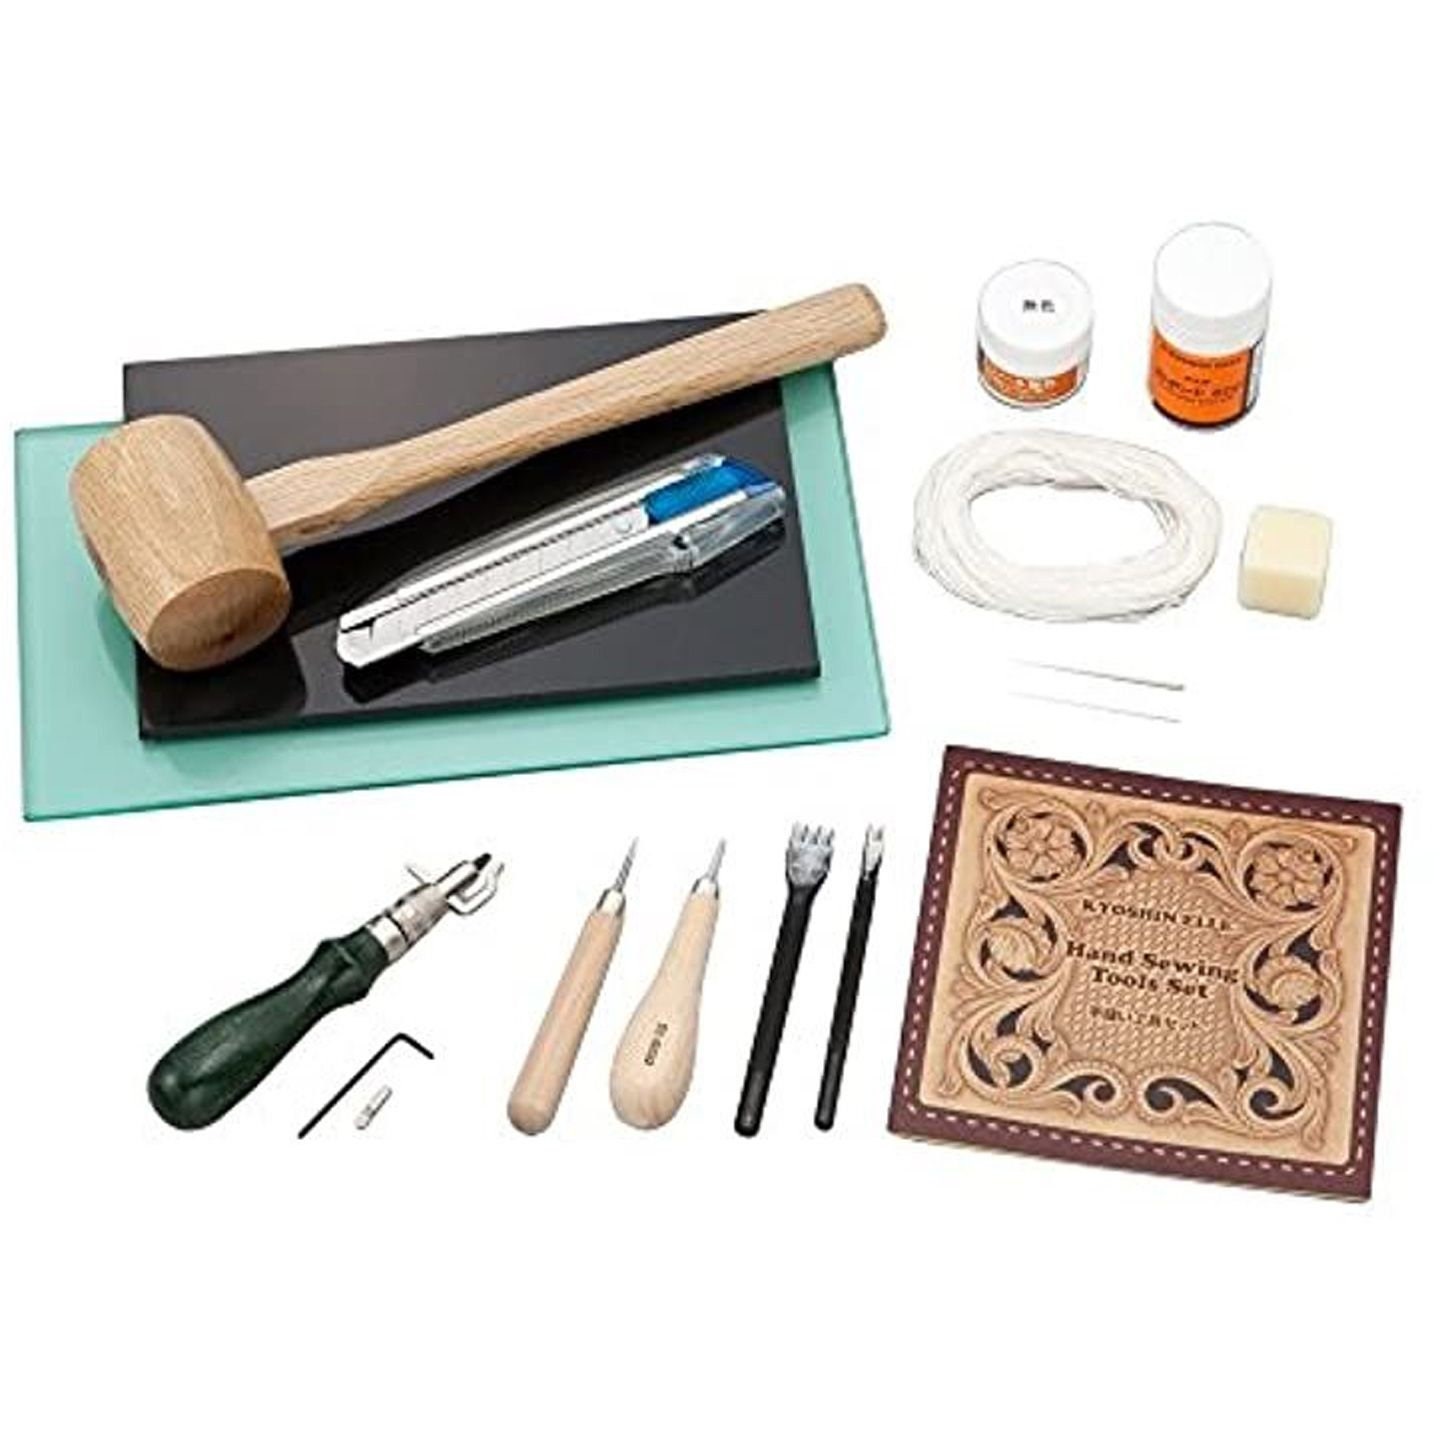 Seiwa Leathercraft Professional Hand Sewing Kit Pricking Iron Awl Thread & Needle Stitching Supplies Set, for Leather Working